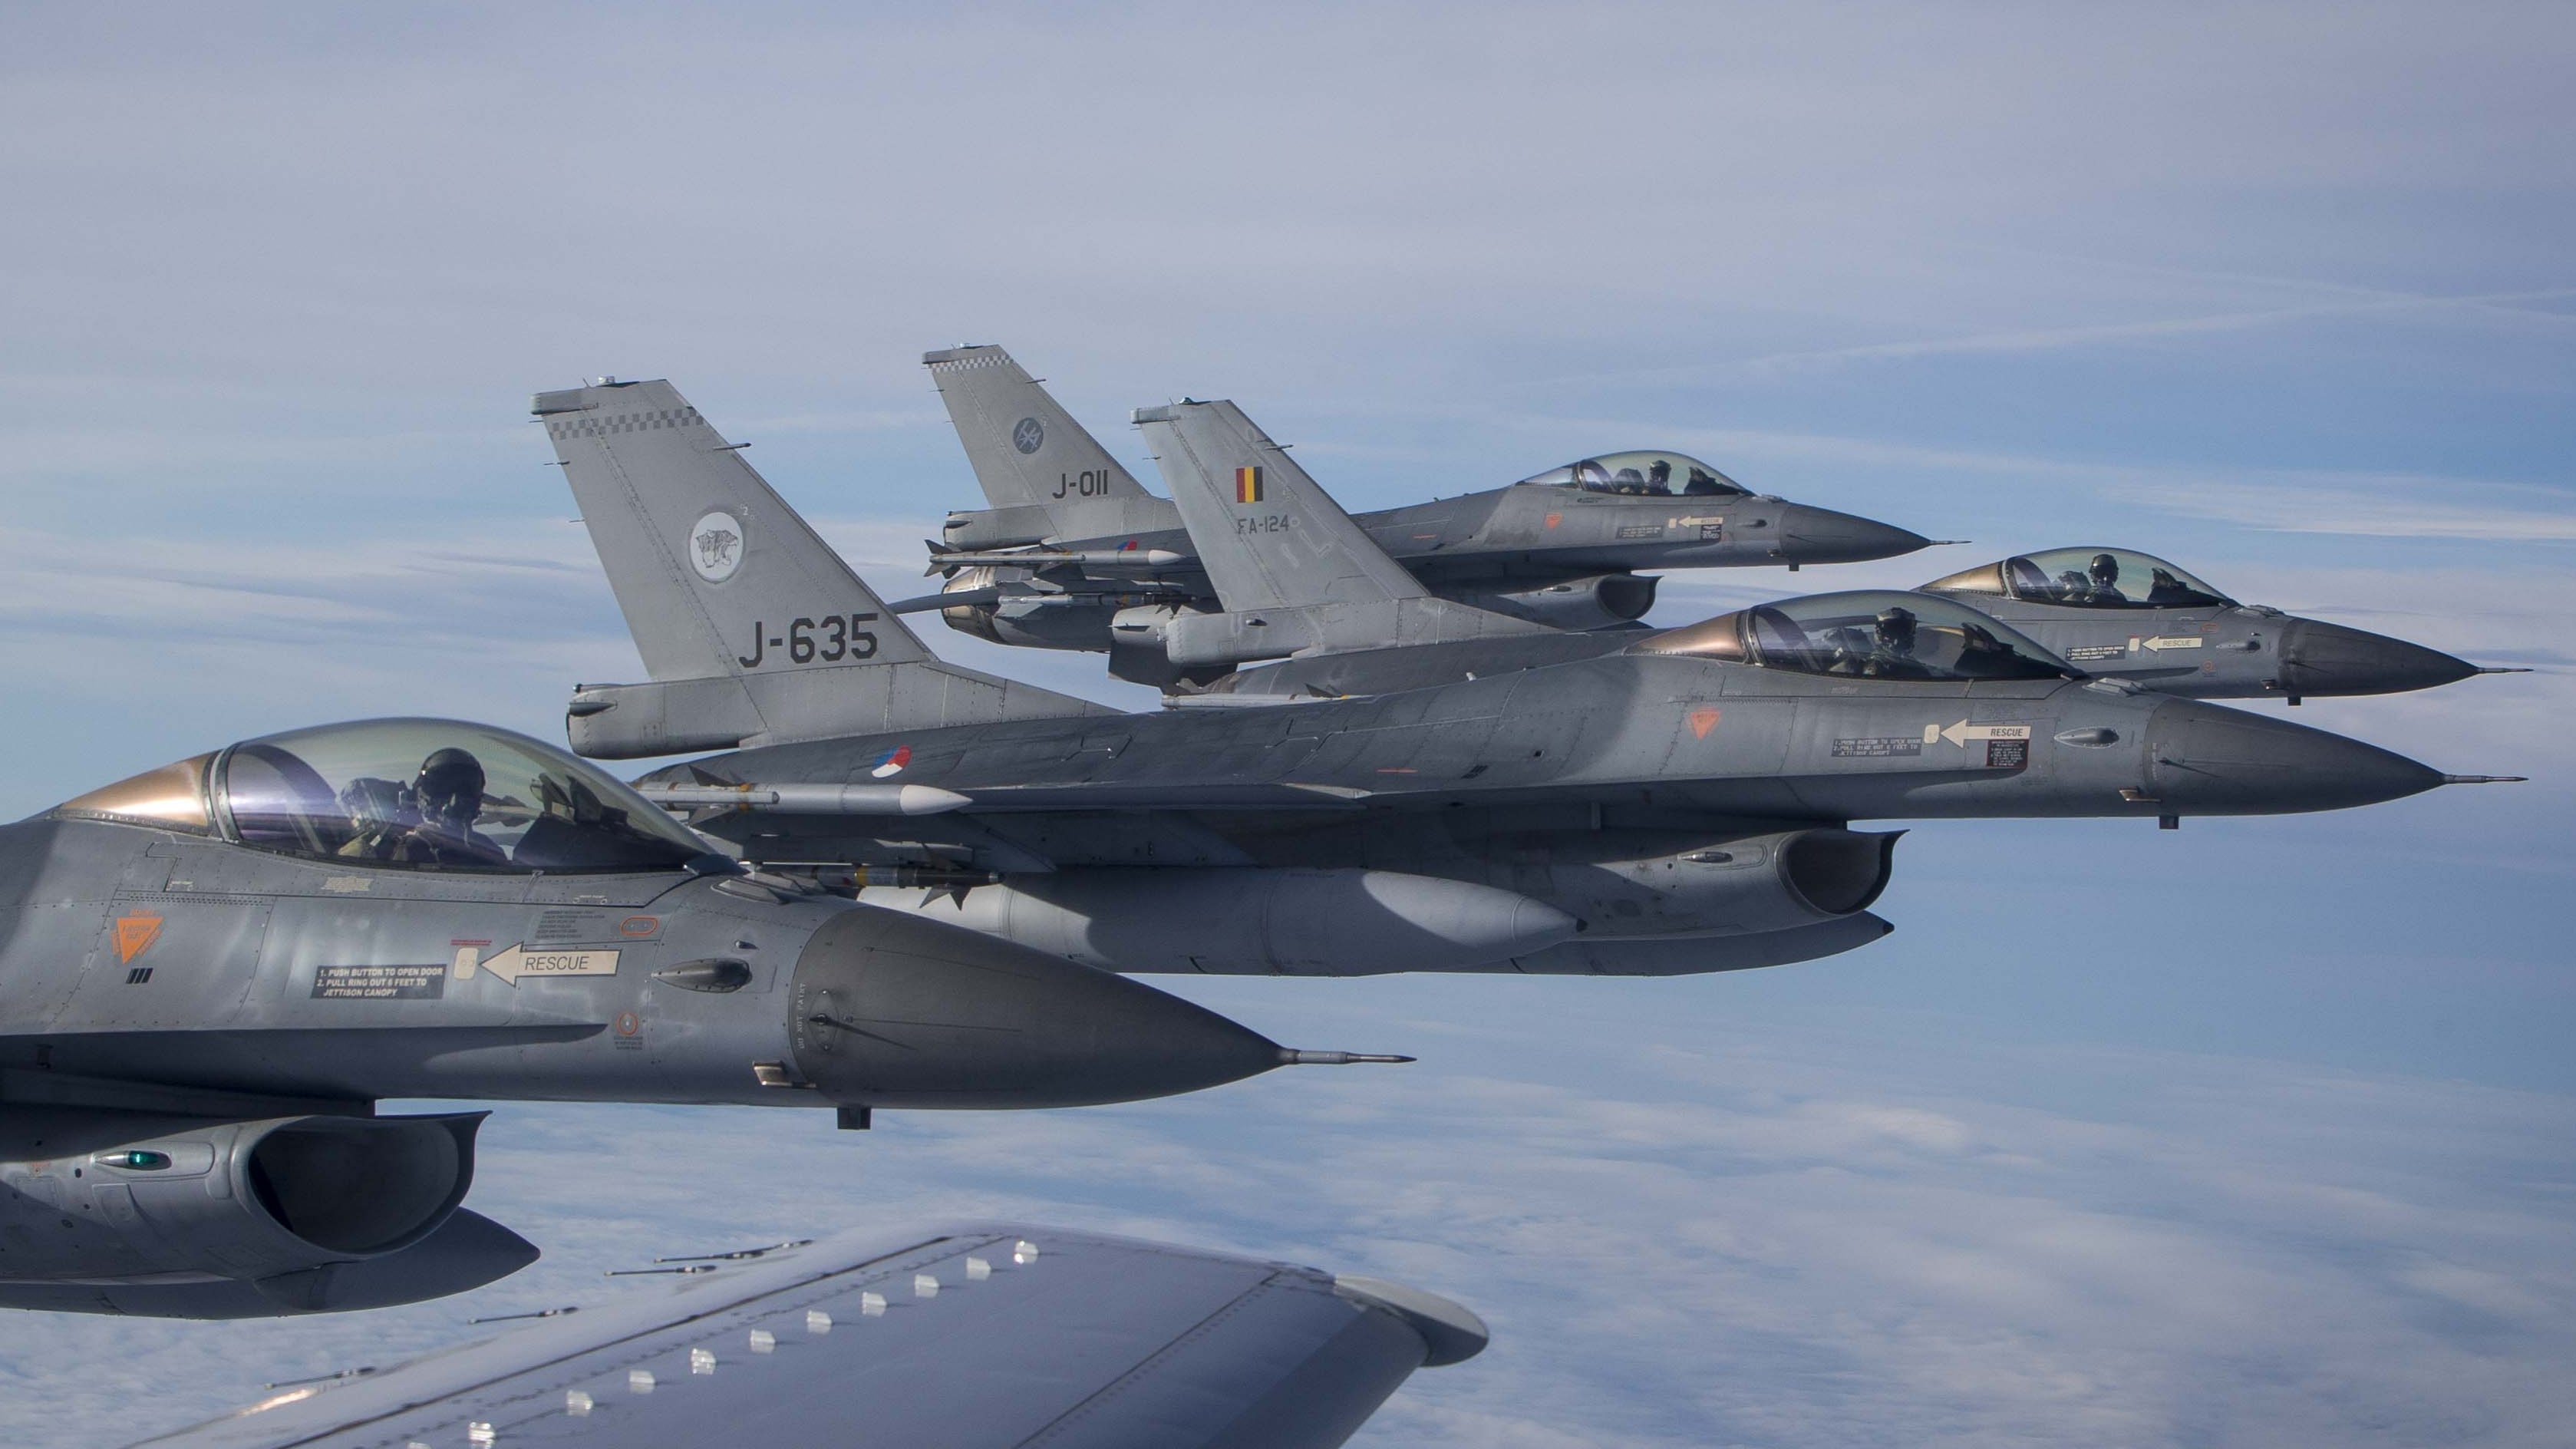 Russische bommenwerpers naderen Nederland, F-16's ingezet